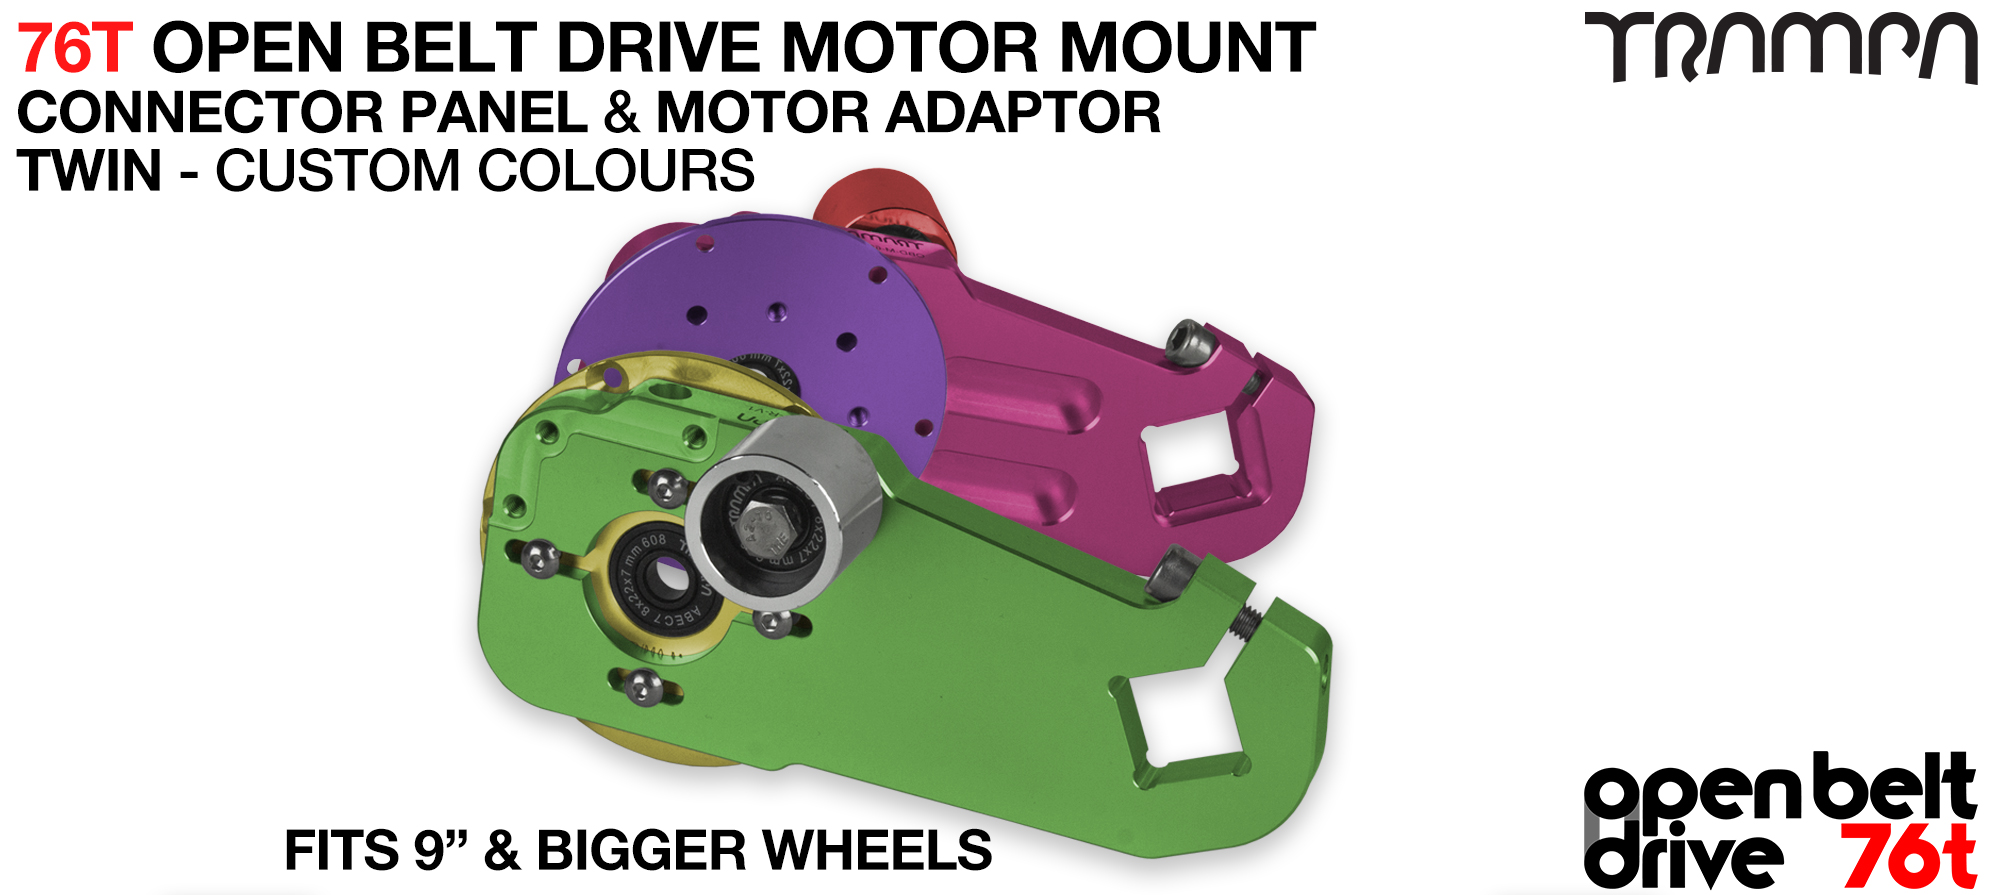 76T Open Belt Drive Motor Mount and Motor Adaptor - TWIN 